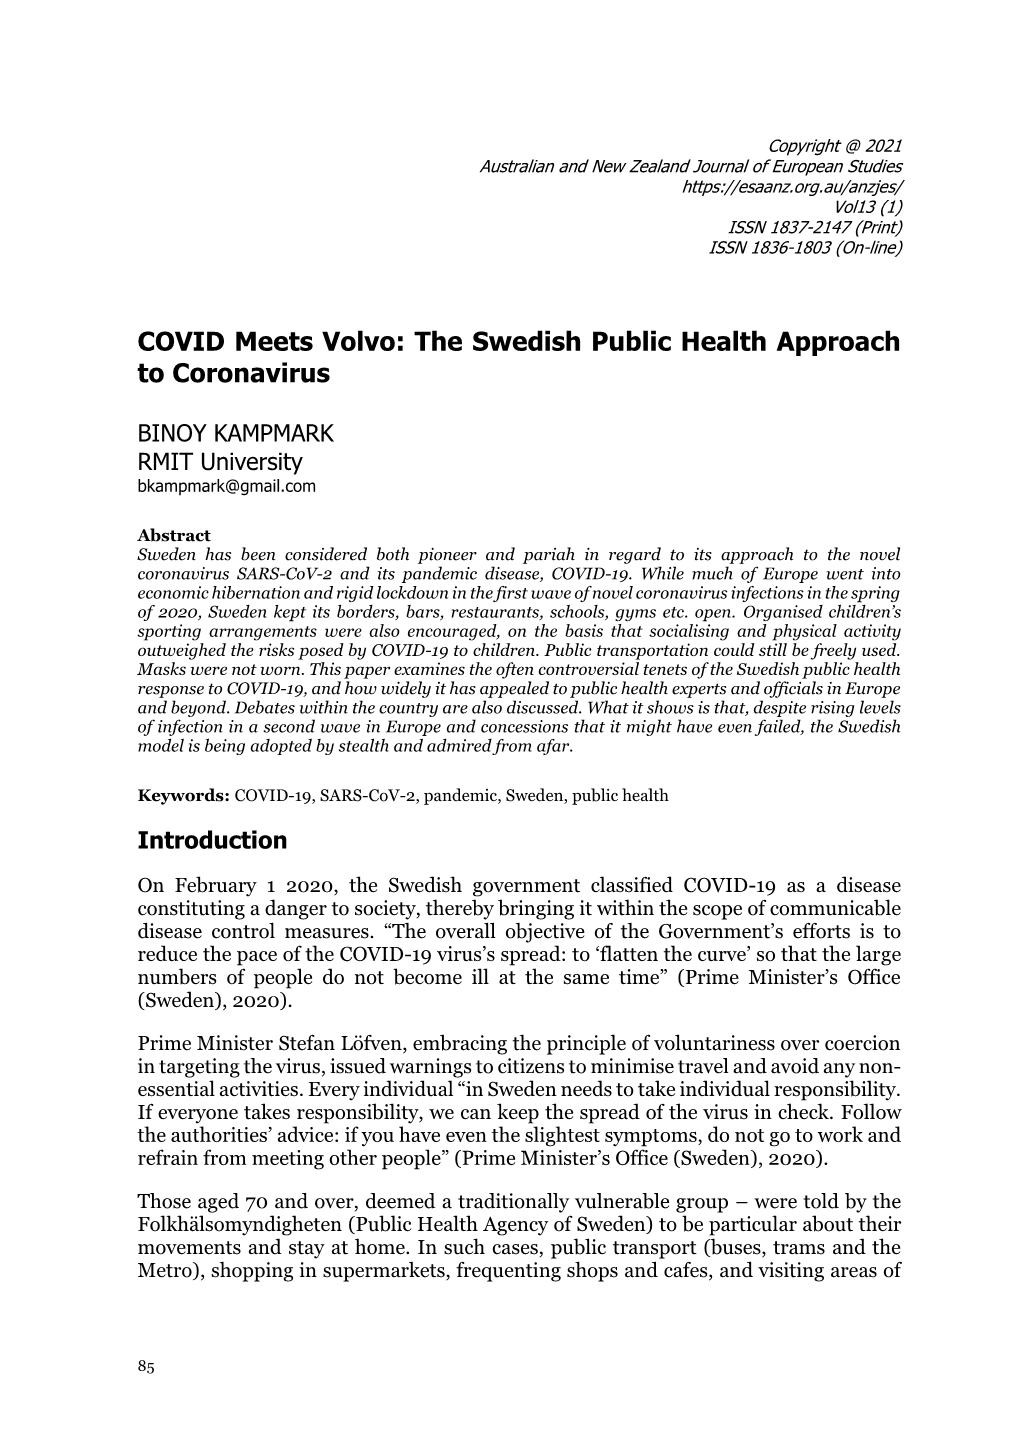 The Swedish Public Health Approach to Coronavirus